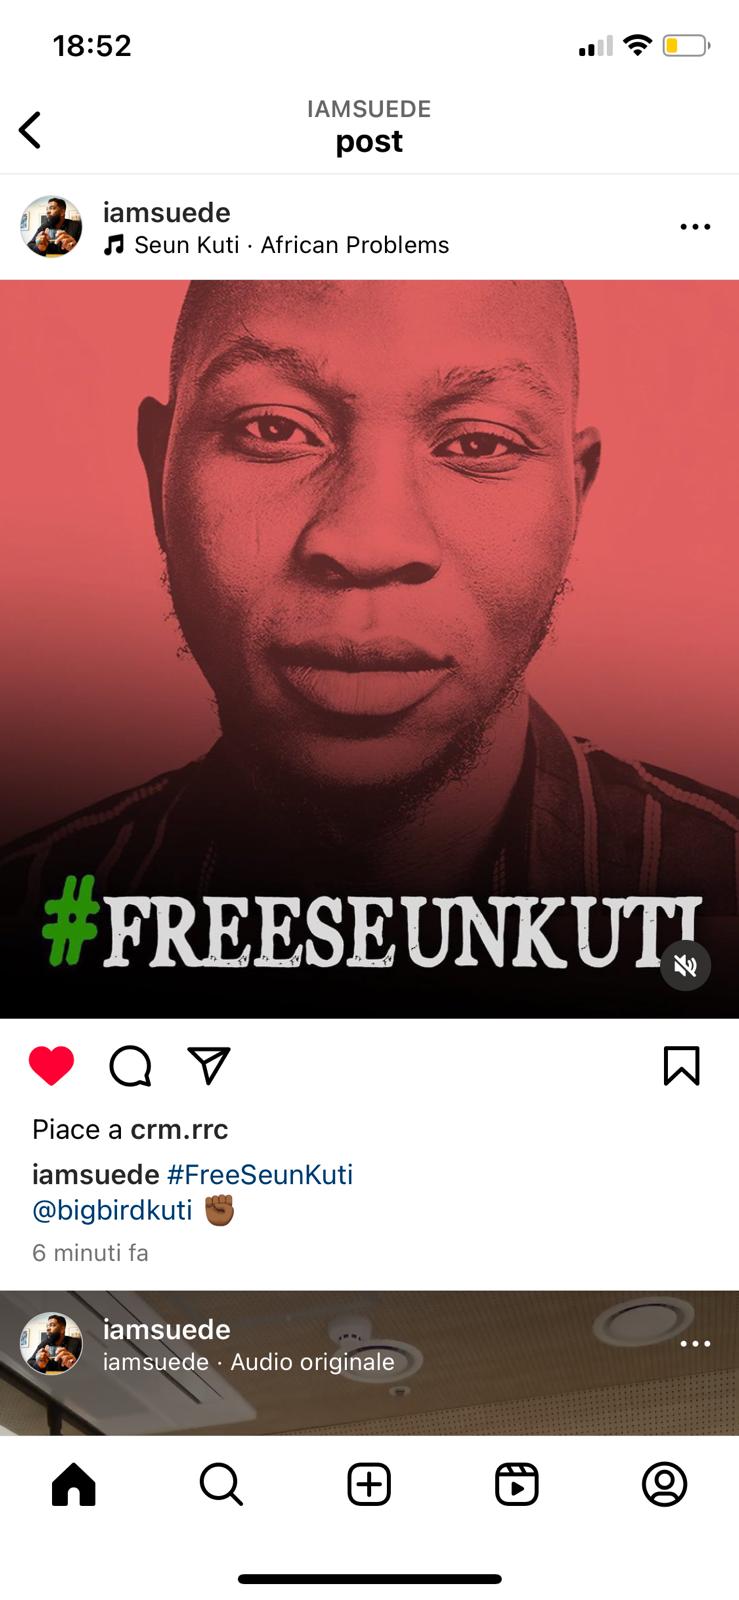 Global Musician Join #FreeSeunKuti Campaign